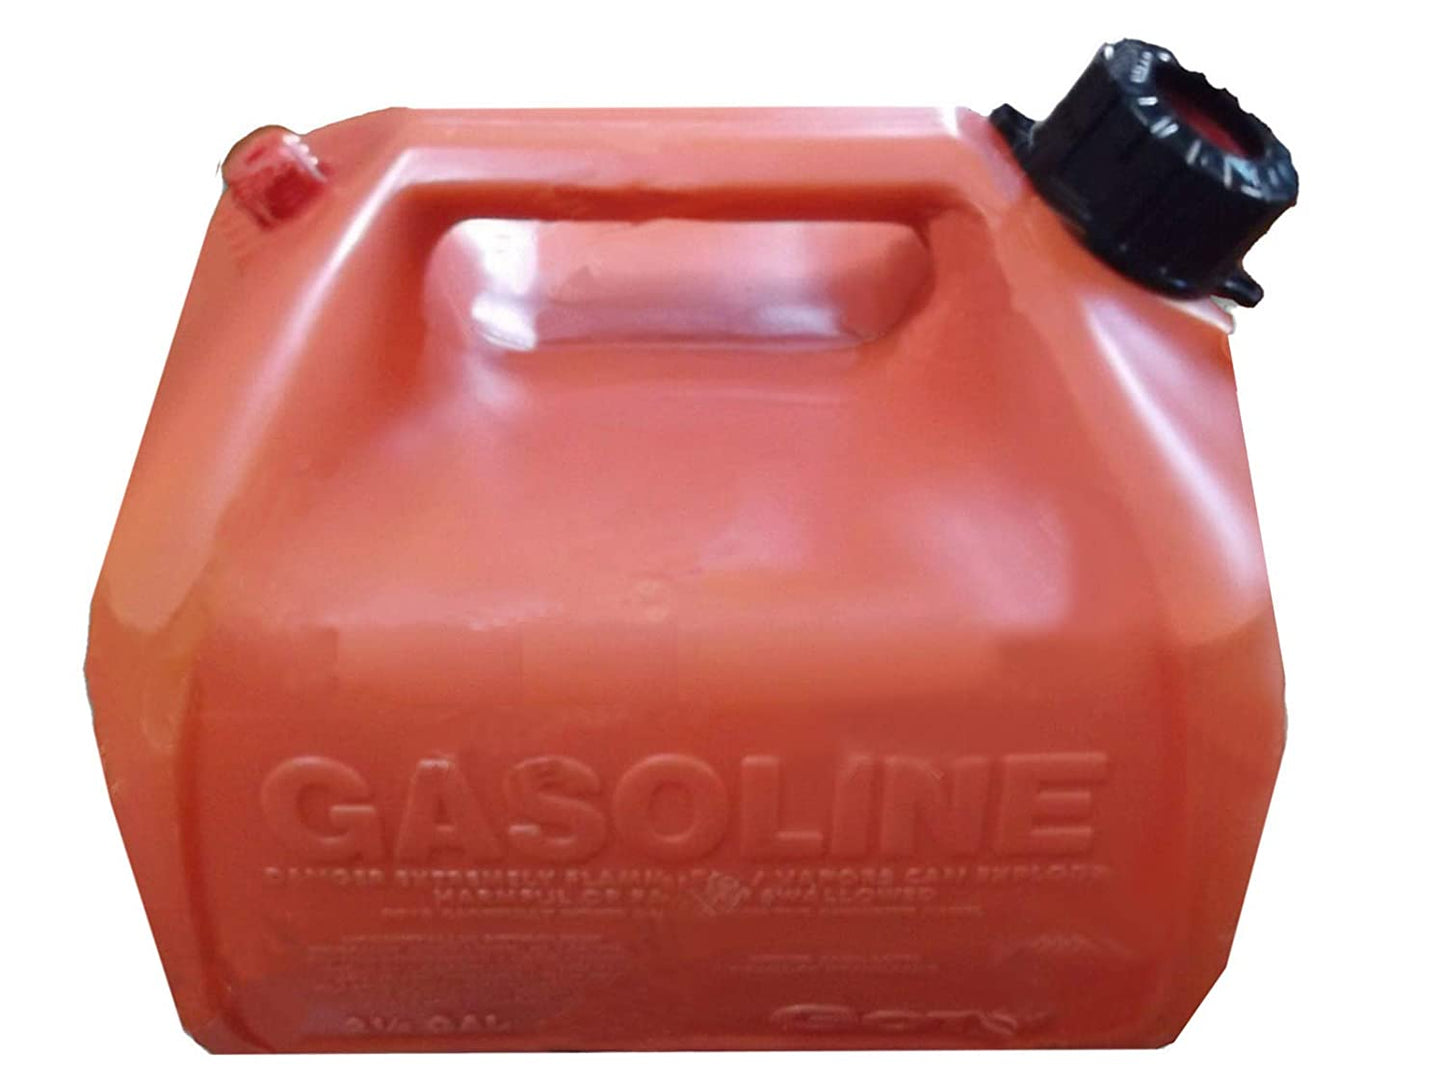 2 New Gas CAN Screw CAPS fits Gott I Rubbermaid I Essence I Blitz I Some Kolpi 8.49 freeshipping - Kool Products